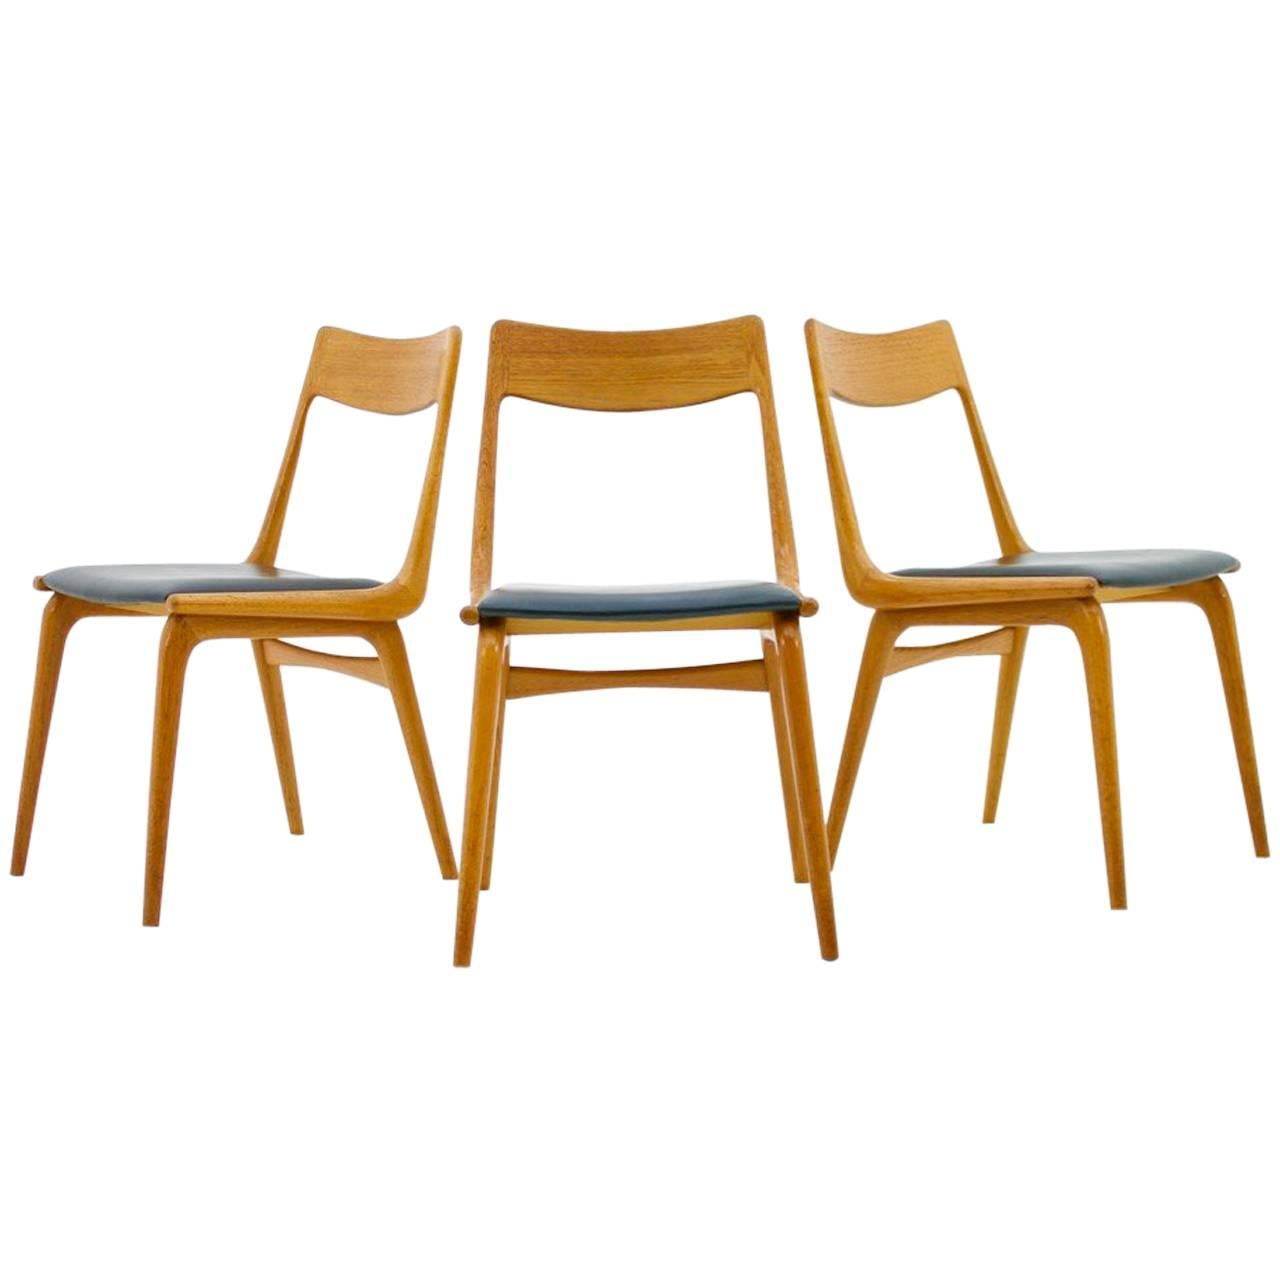 Erik Christensen Boomerang Dining Chairs, Teak and Leather, Denmark, 1950s